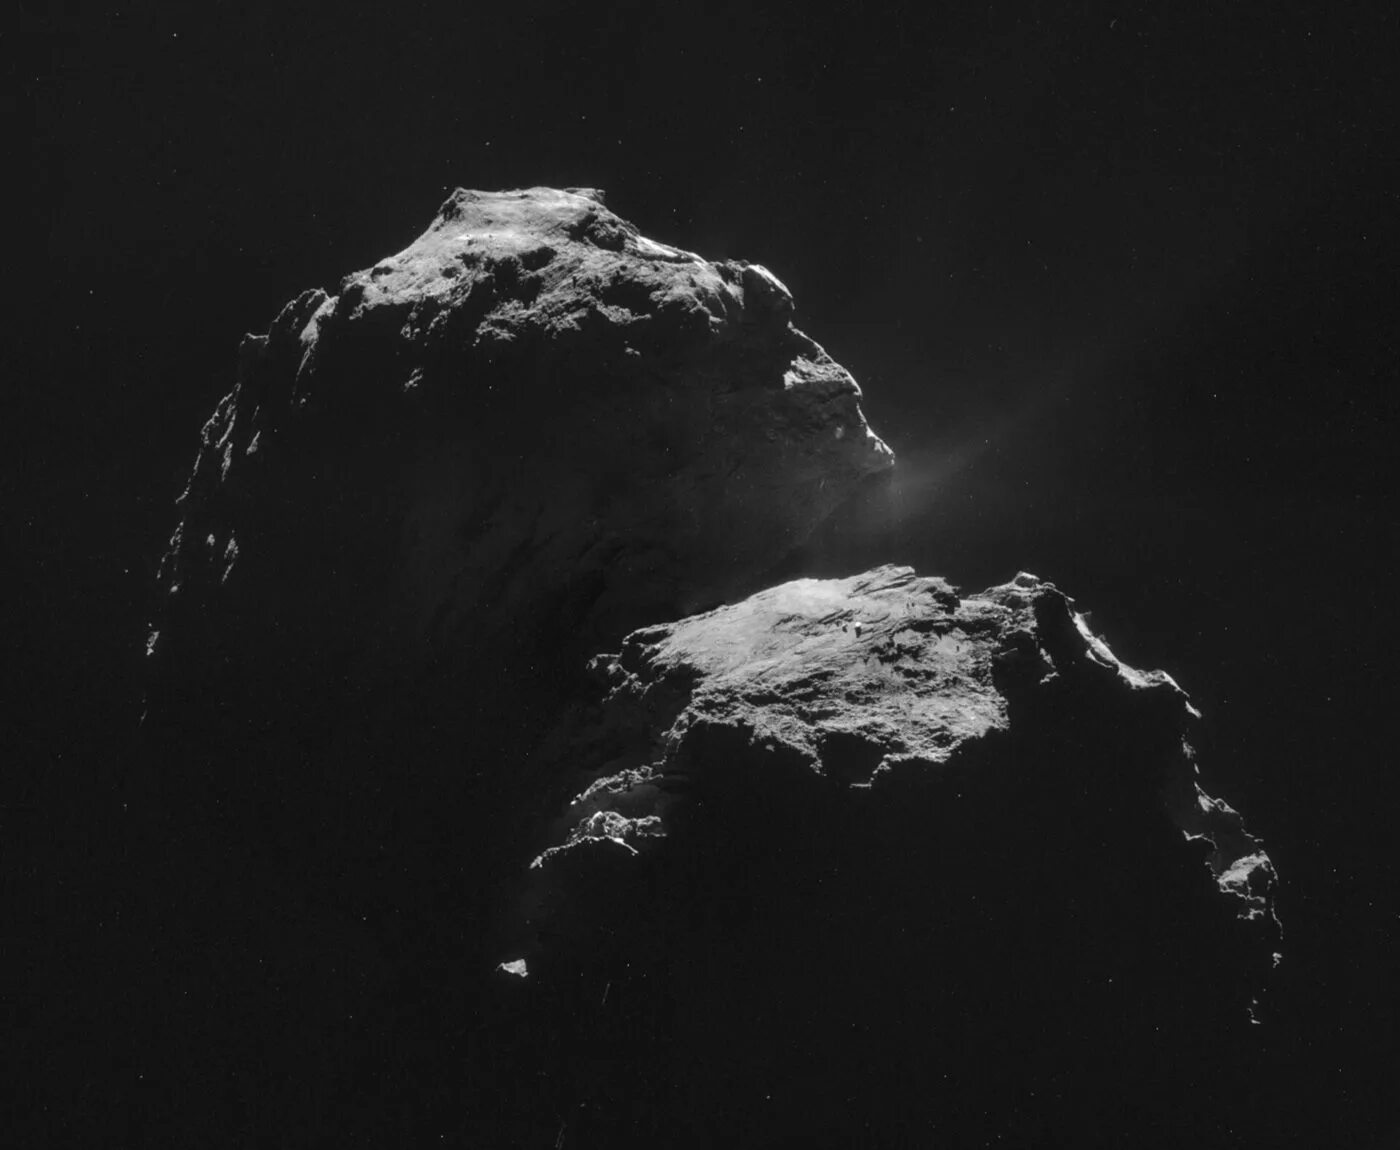 67p чурюмова герасименко. 67р Чурюмова-Герасименко. Comet 67p/Churyumov-Gerasimenko. Комета 67p/Чурюмова-Герасименко Rosetta. Поверхность кометы 67p Чурюмова-Герасименко.